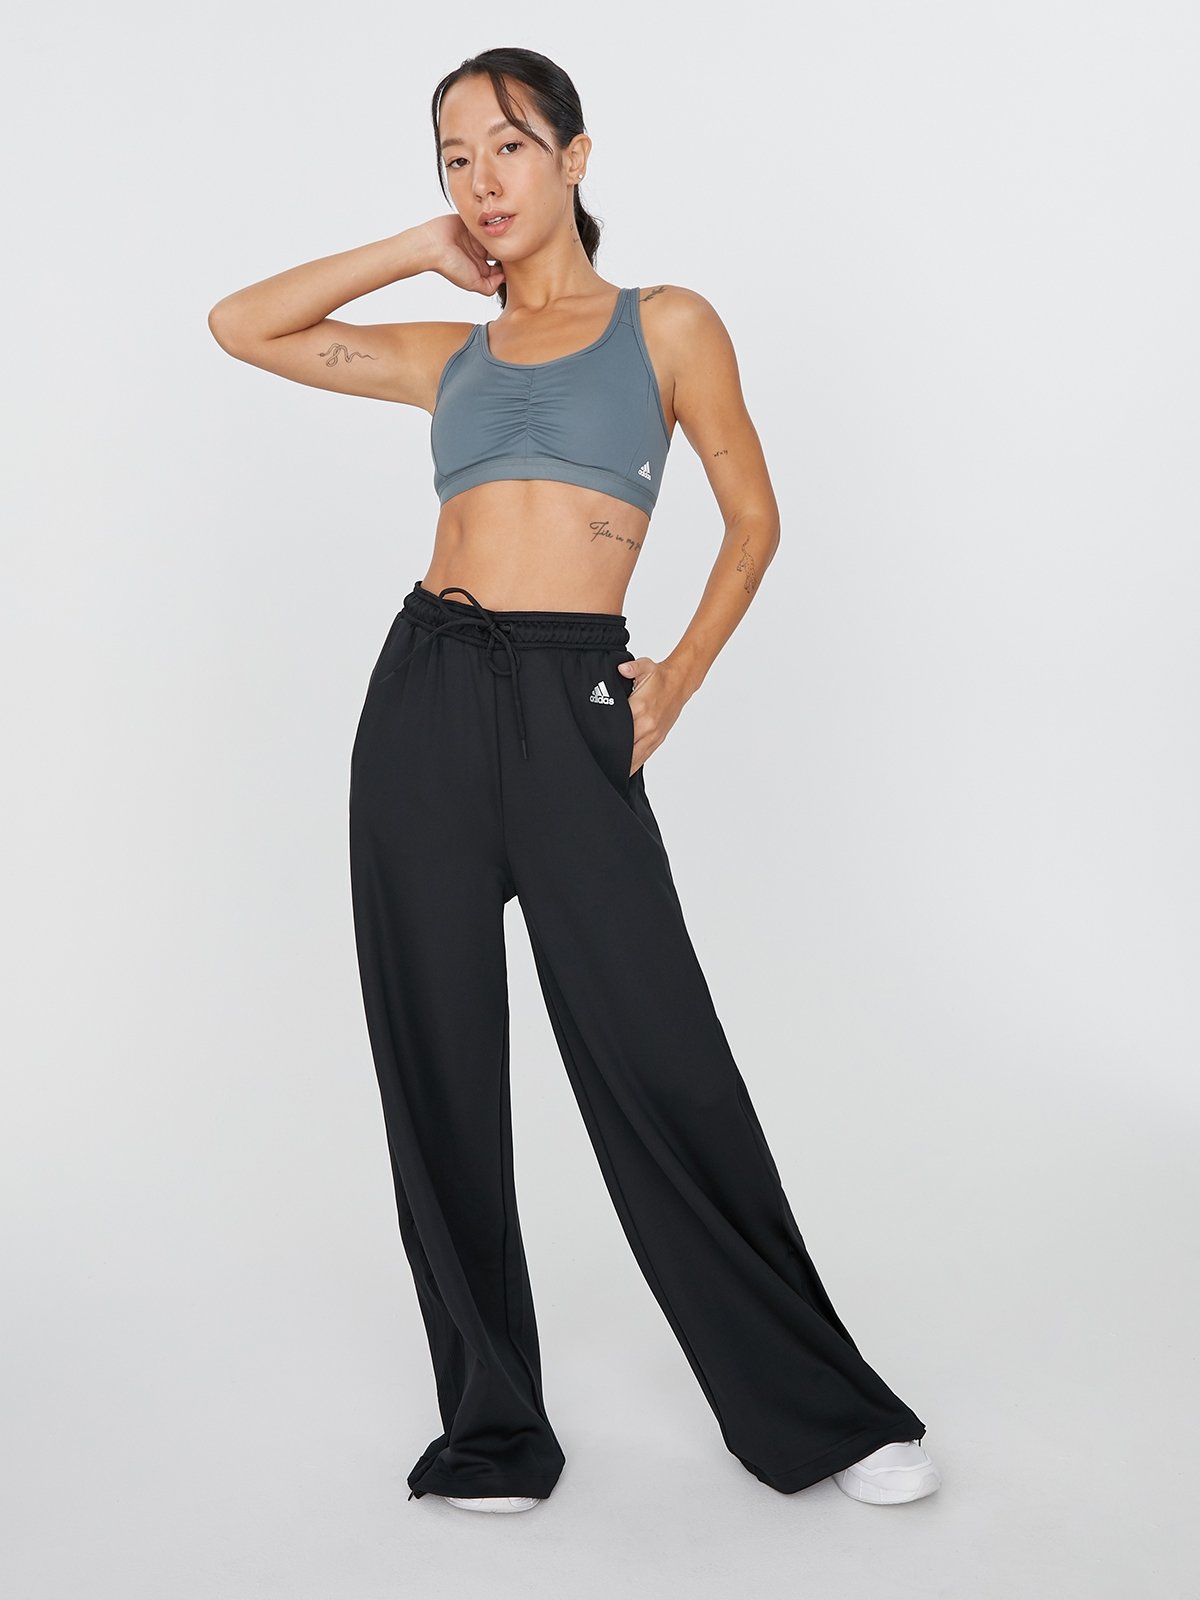 Adidas x Zoe Saldana Tracksuit Bottoms - Black - Pomelo Fashion